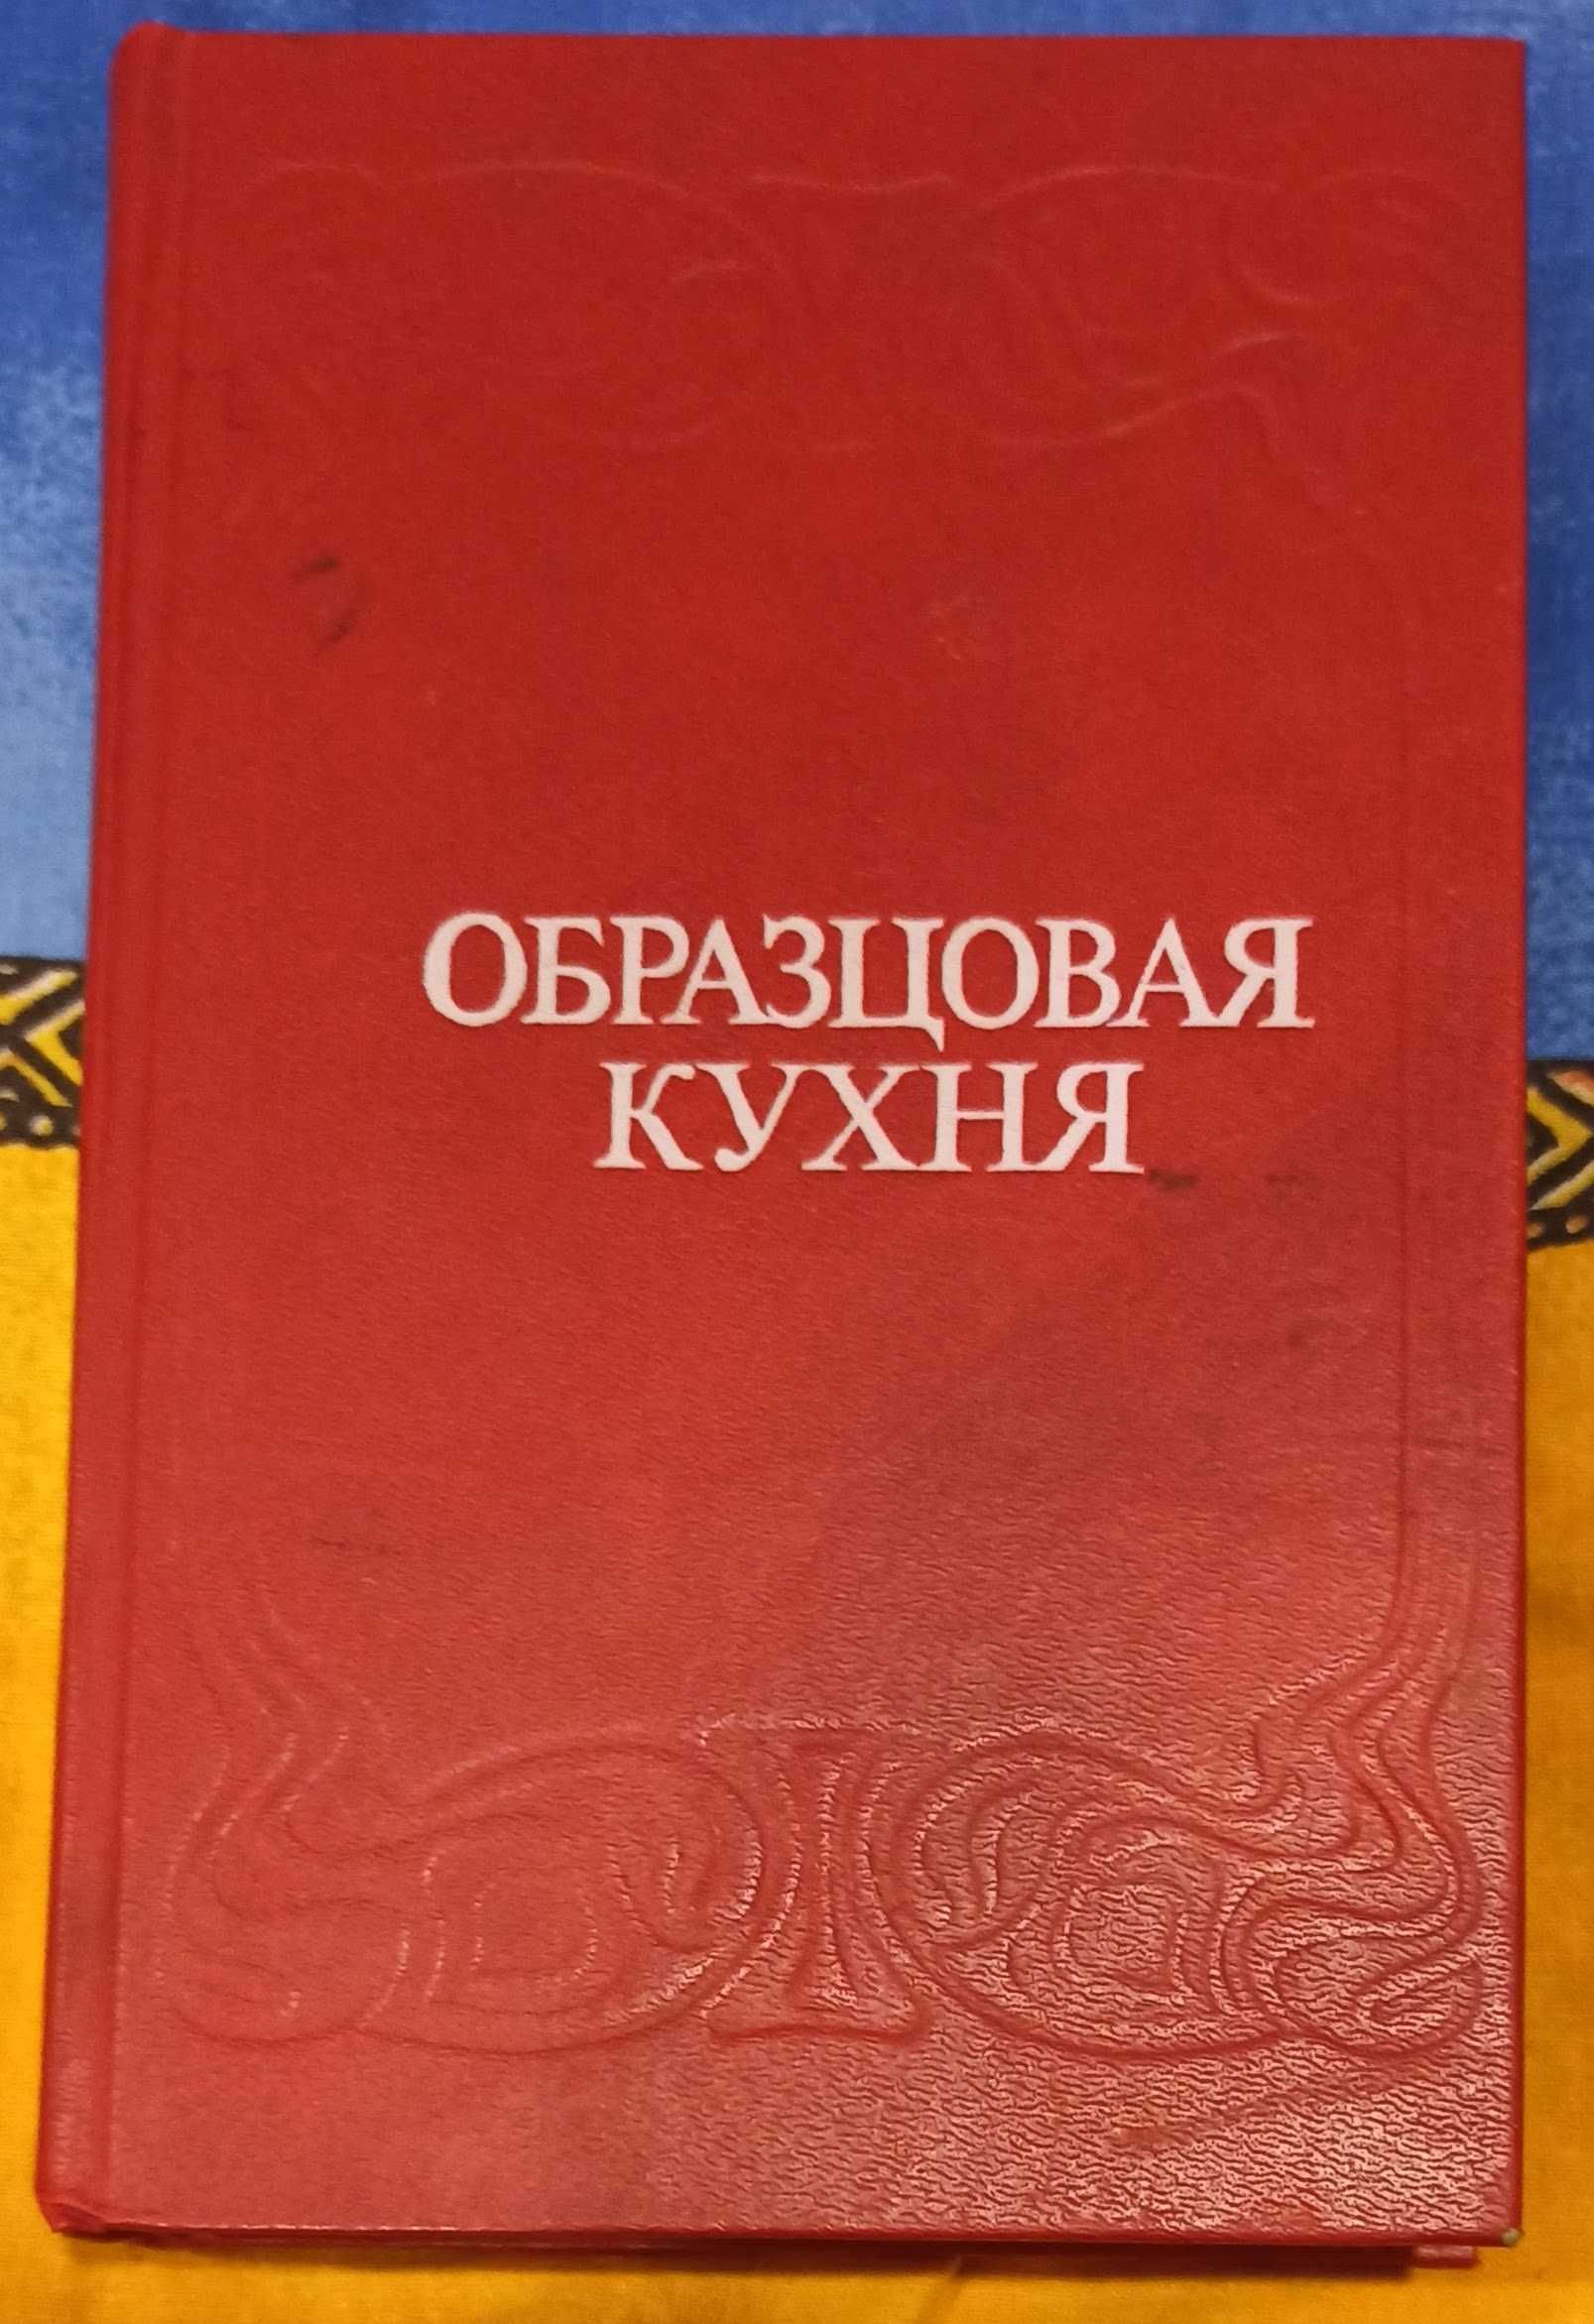 Репринтне видання книги "Образцовая кухня"